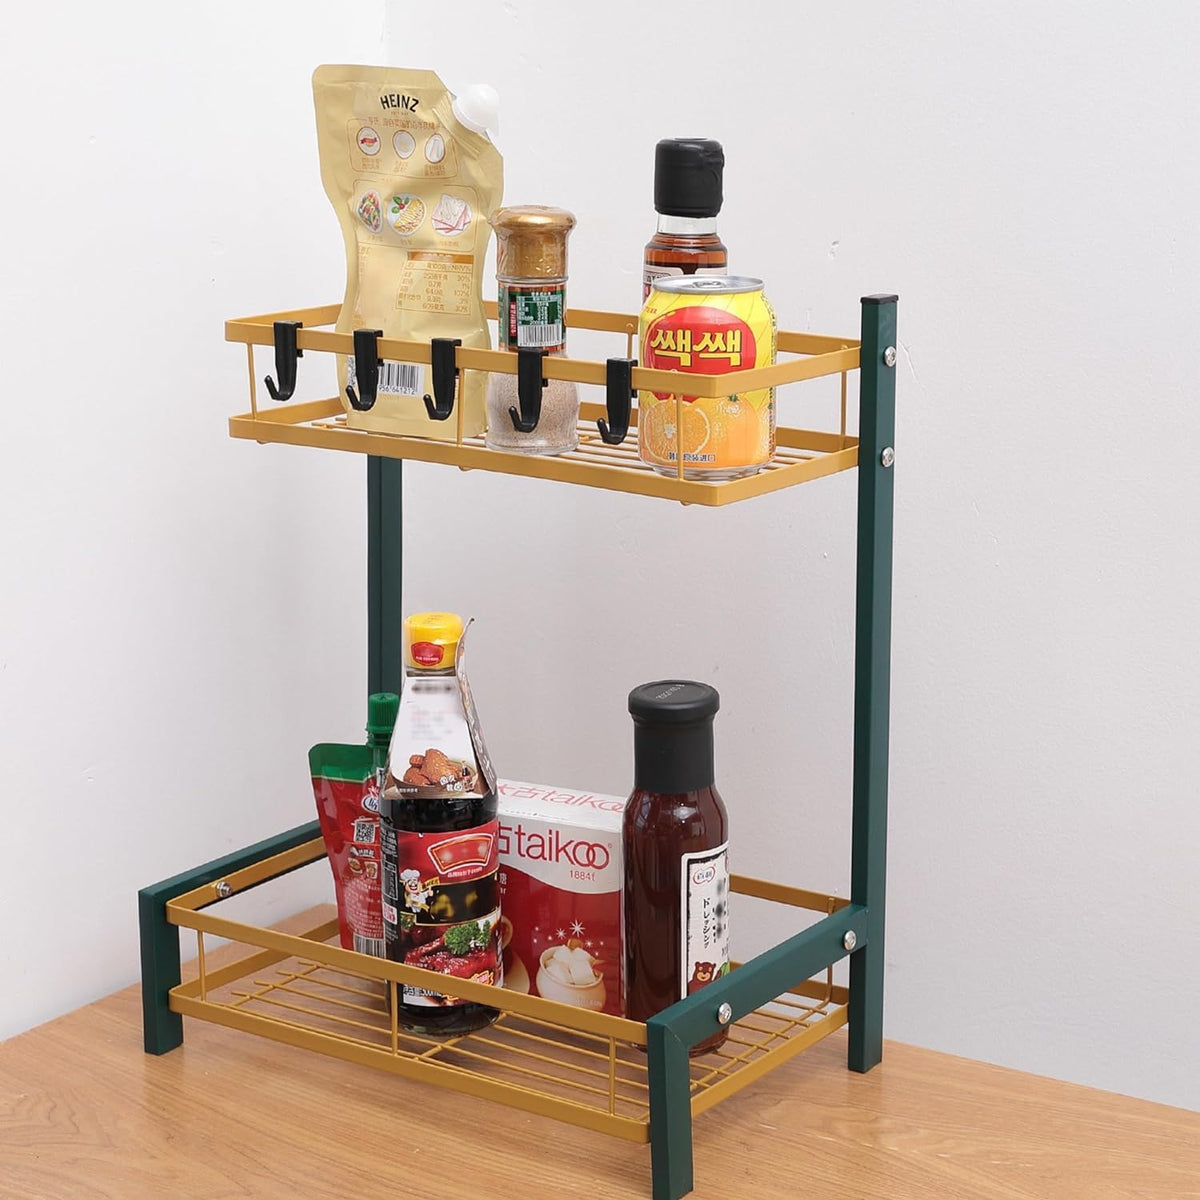 Plantex 2-Layer Dish Drying Rack|Storage Rack for Kitchen Counter|Drainboard & Cutting Board Holder|Premium Utensils Basket (Green & Gold)